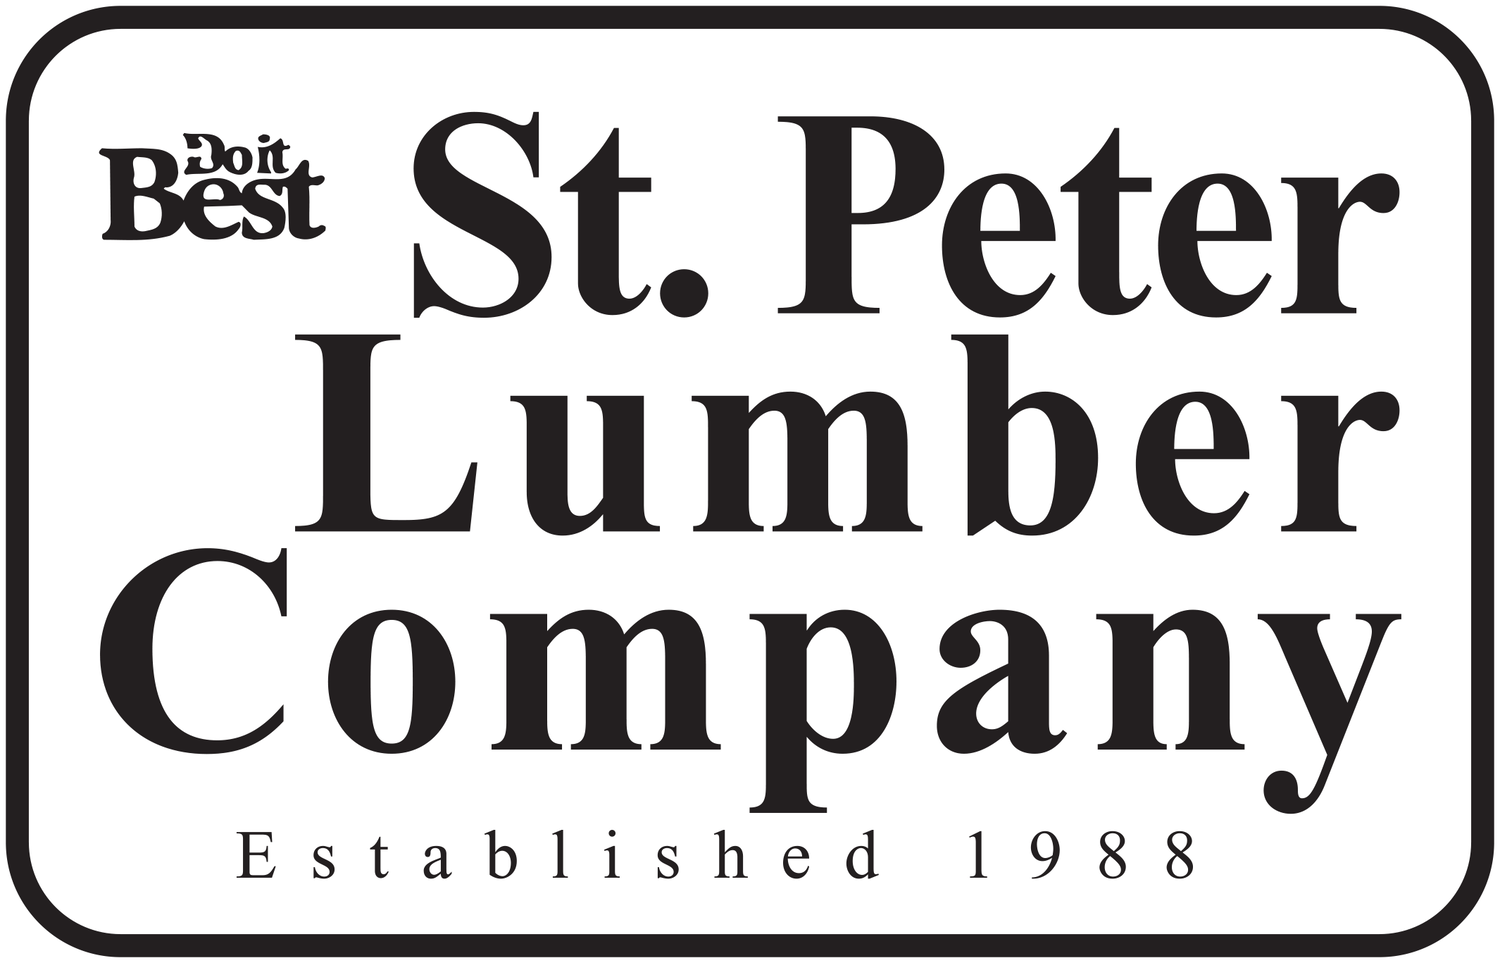 St. Peter Lumber Company